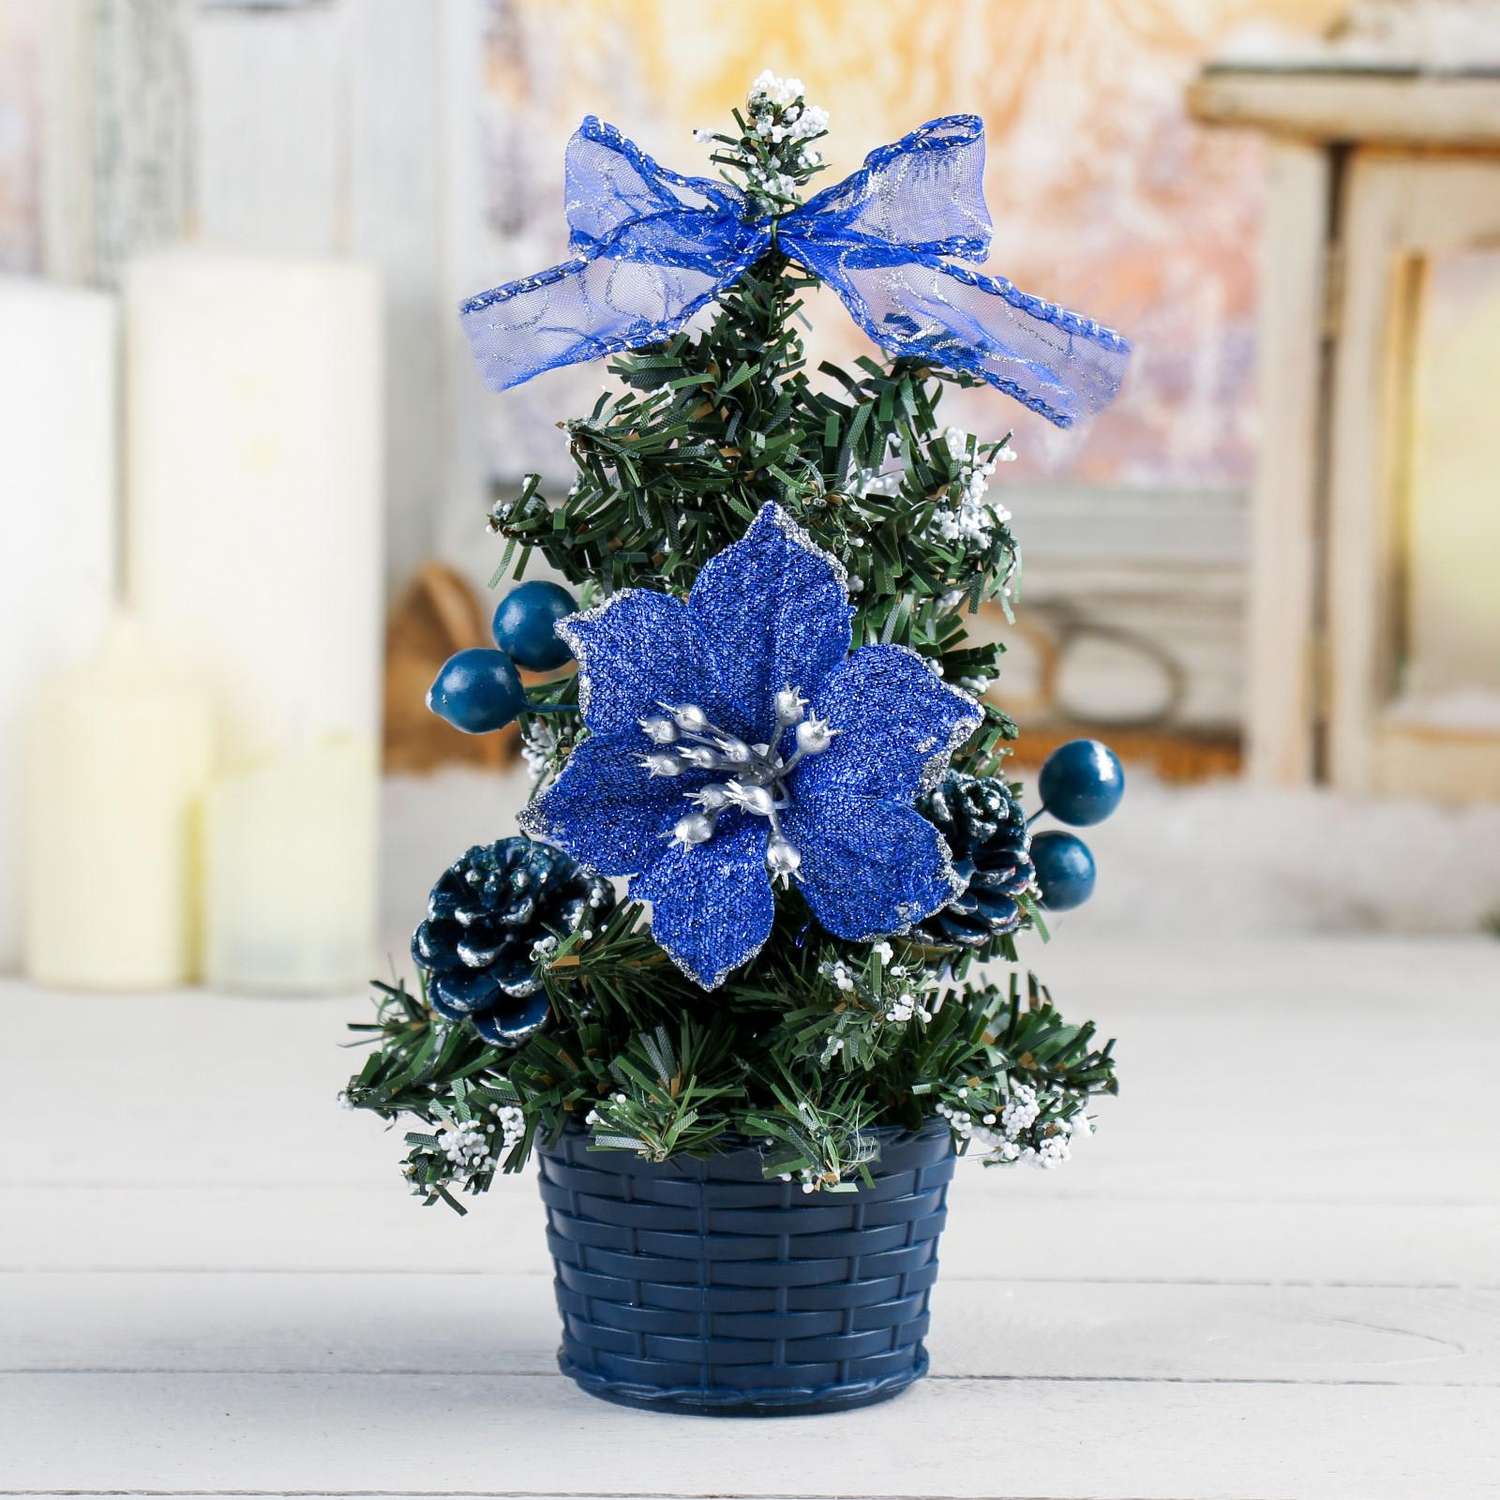 Ёлка Зимнее волшебство декор синий со снегом 20 см d нижнего яруса 12 см - фото 1